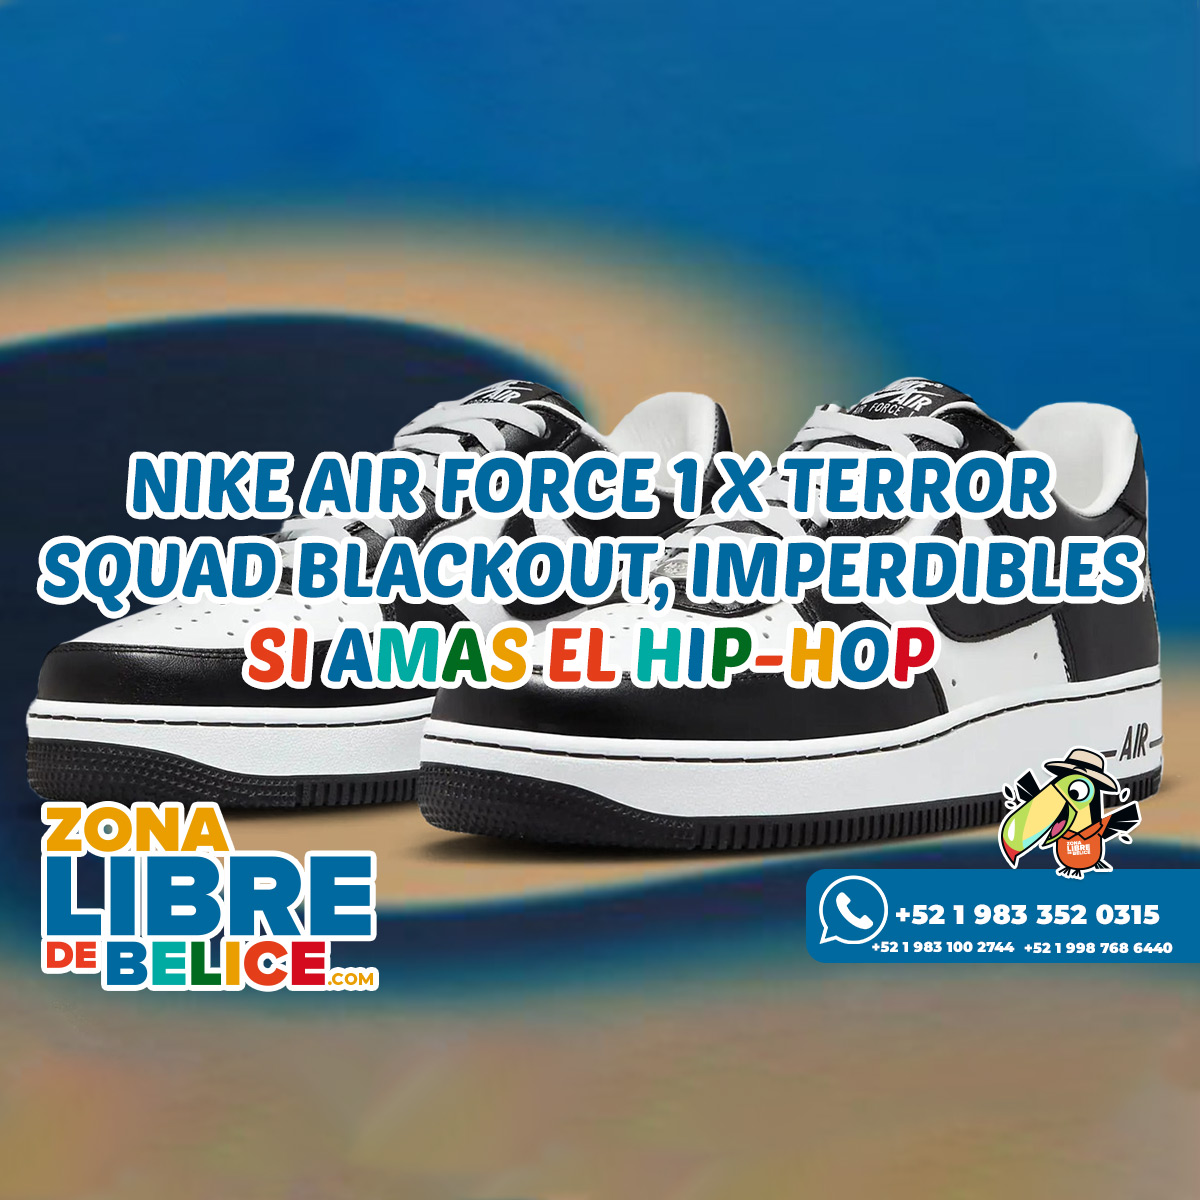 Nike Air Force 1 x Terror Squad Blackout, básicos si amas el hip-hop